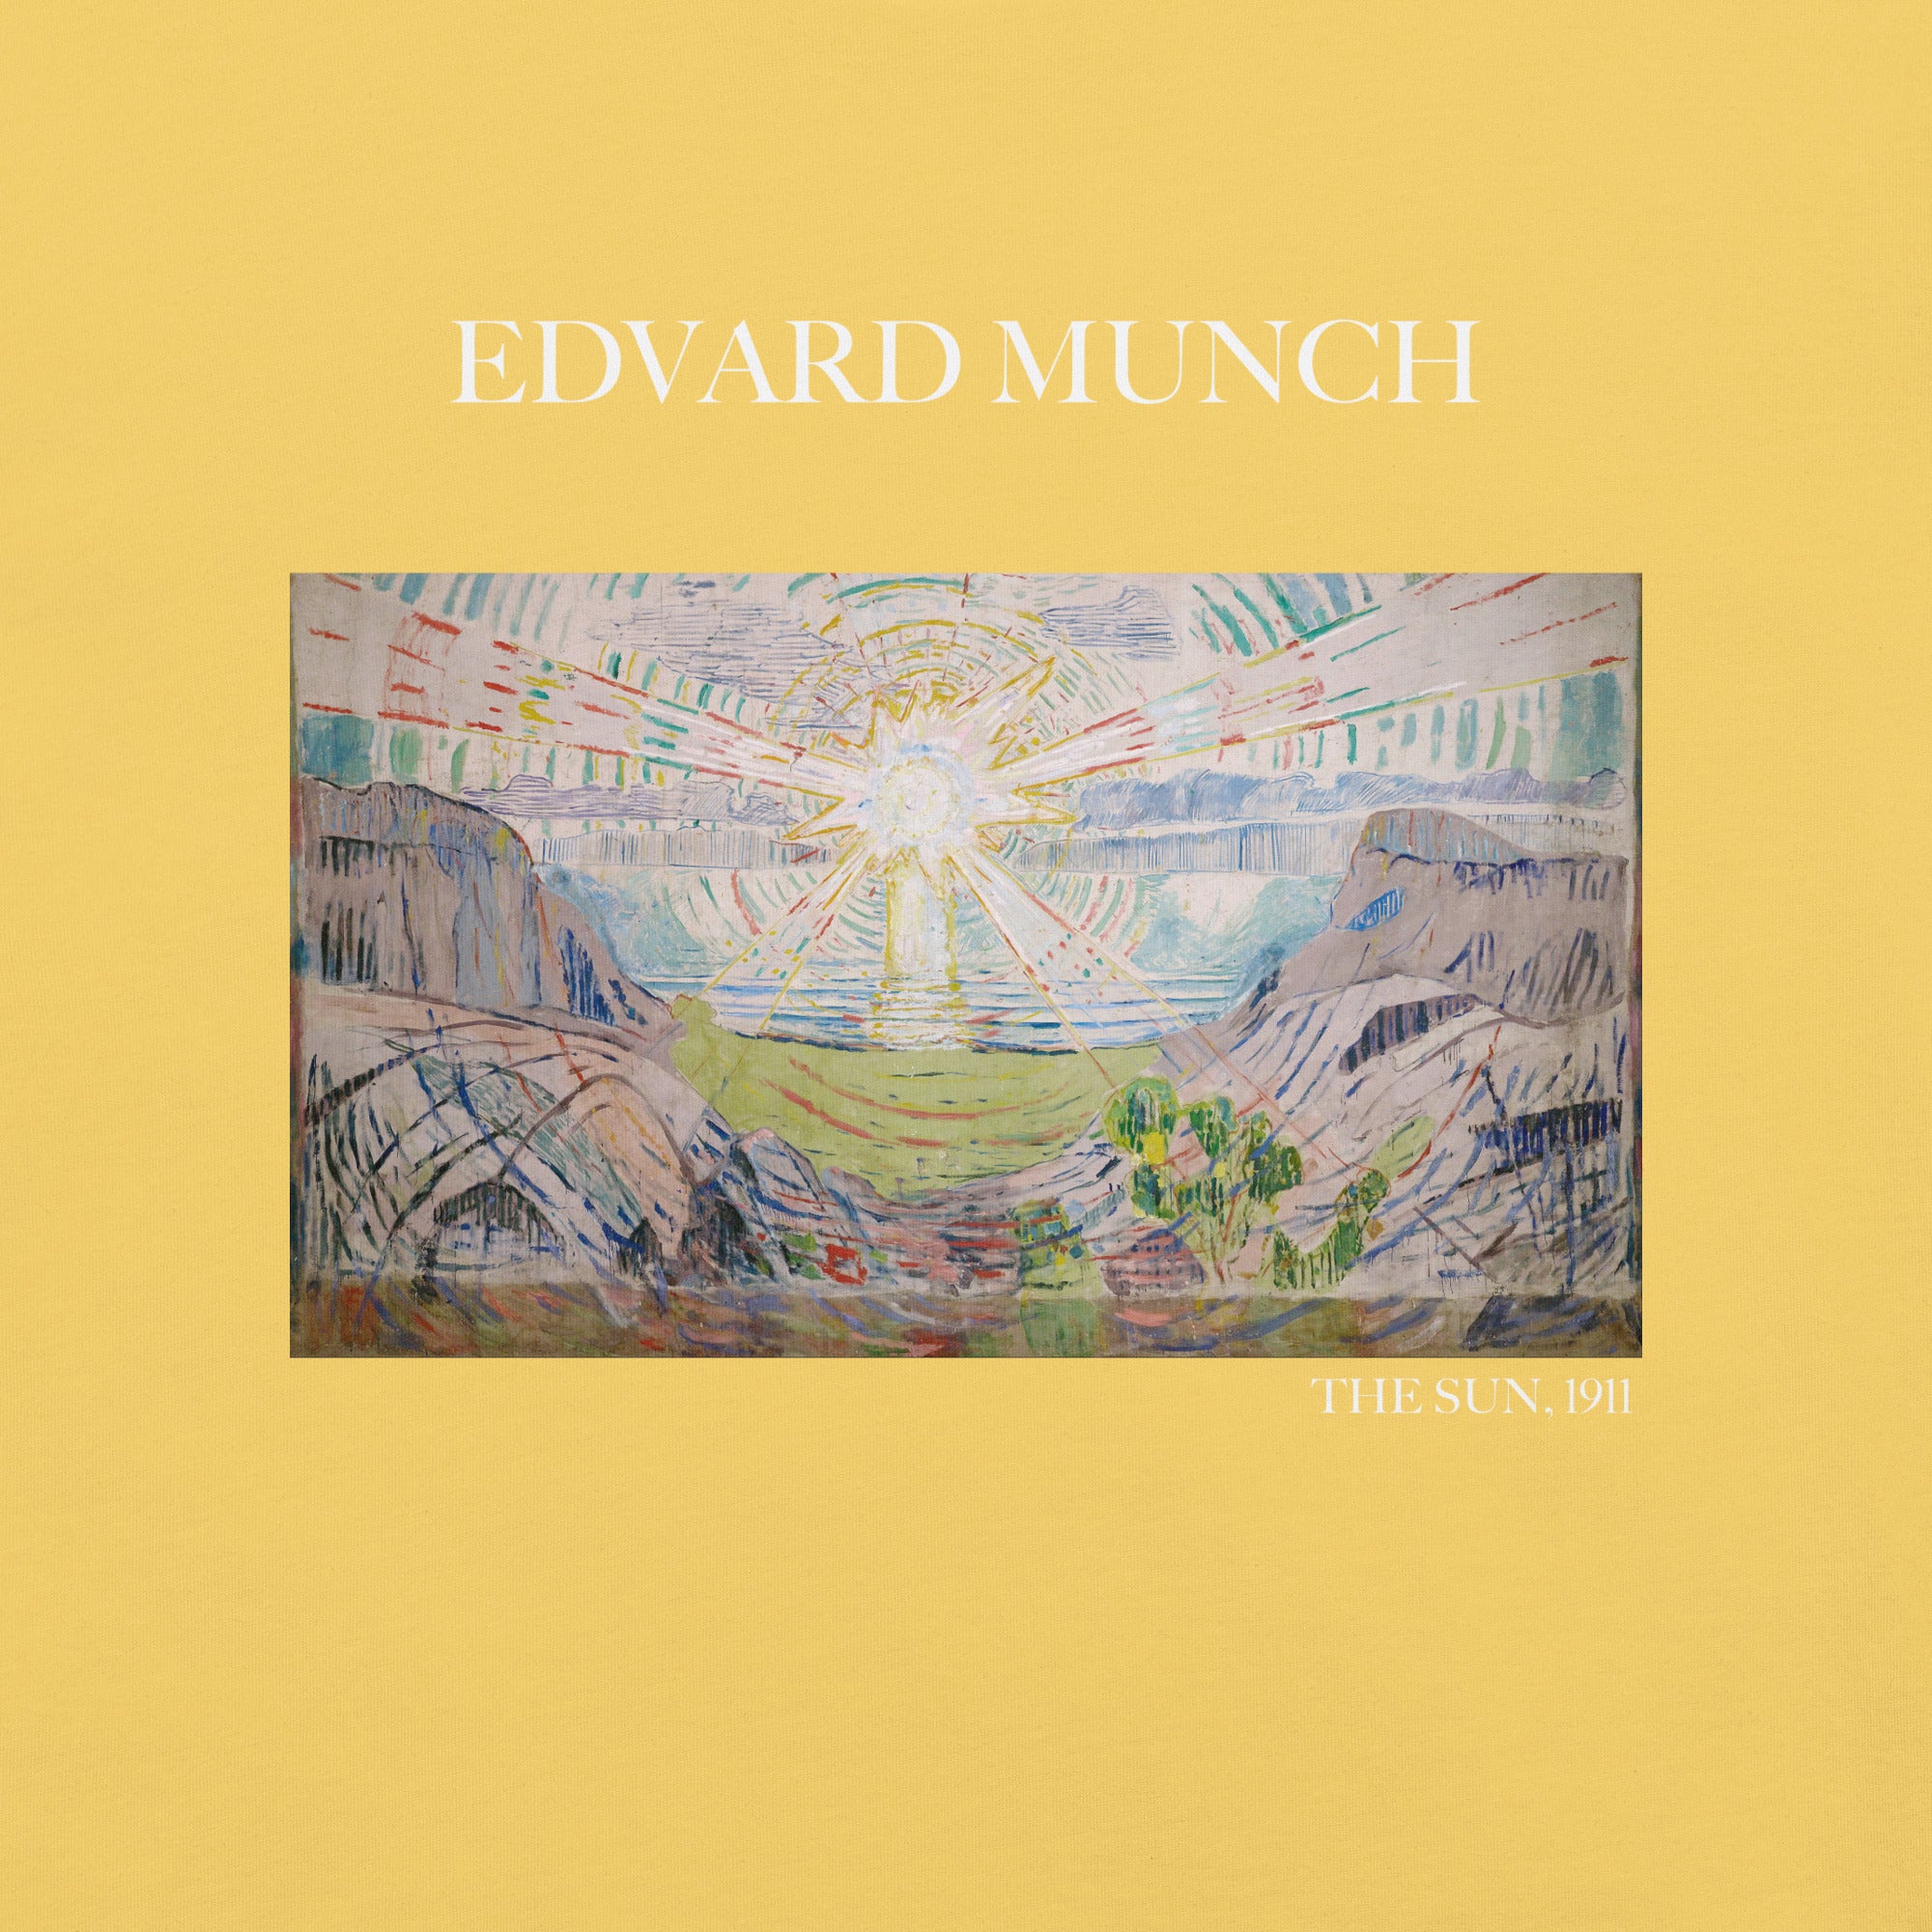 Edvard Munch 'The Sun' Famous Painting T-Shirt | Unisex Classic Art Tee